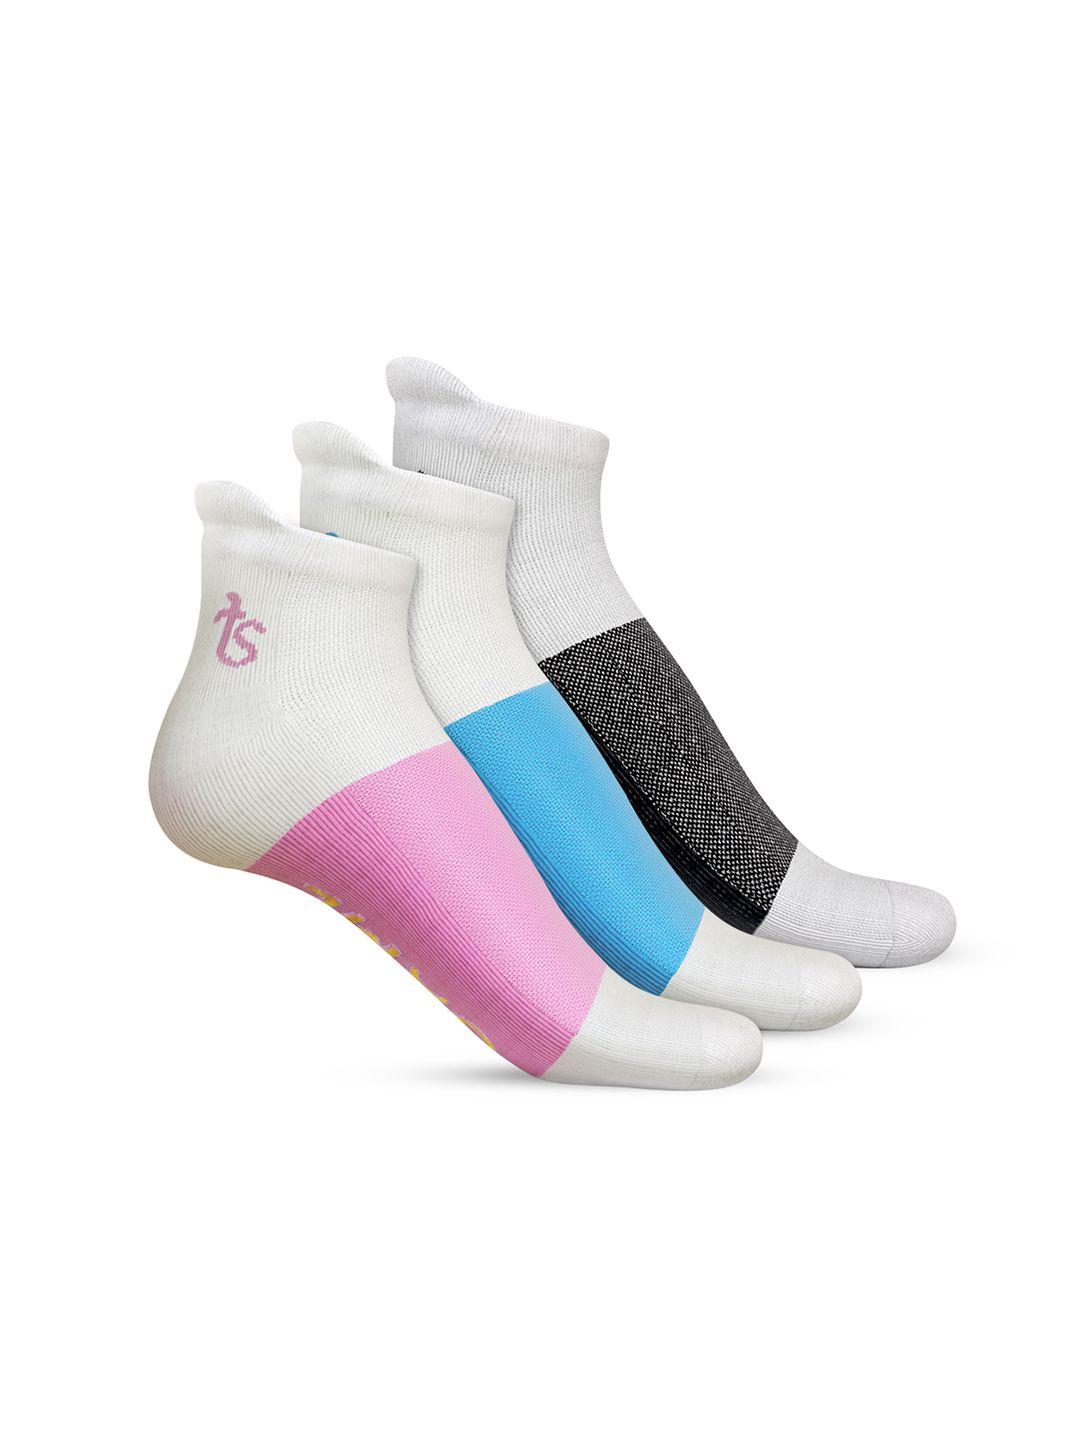 talkingsox pack of 3 colorblocked odour-free ankle length socks